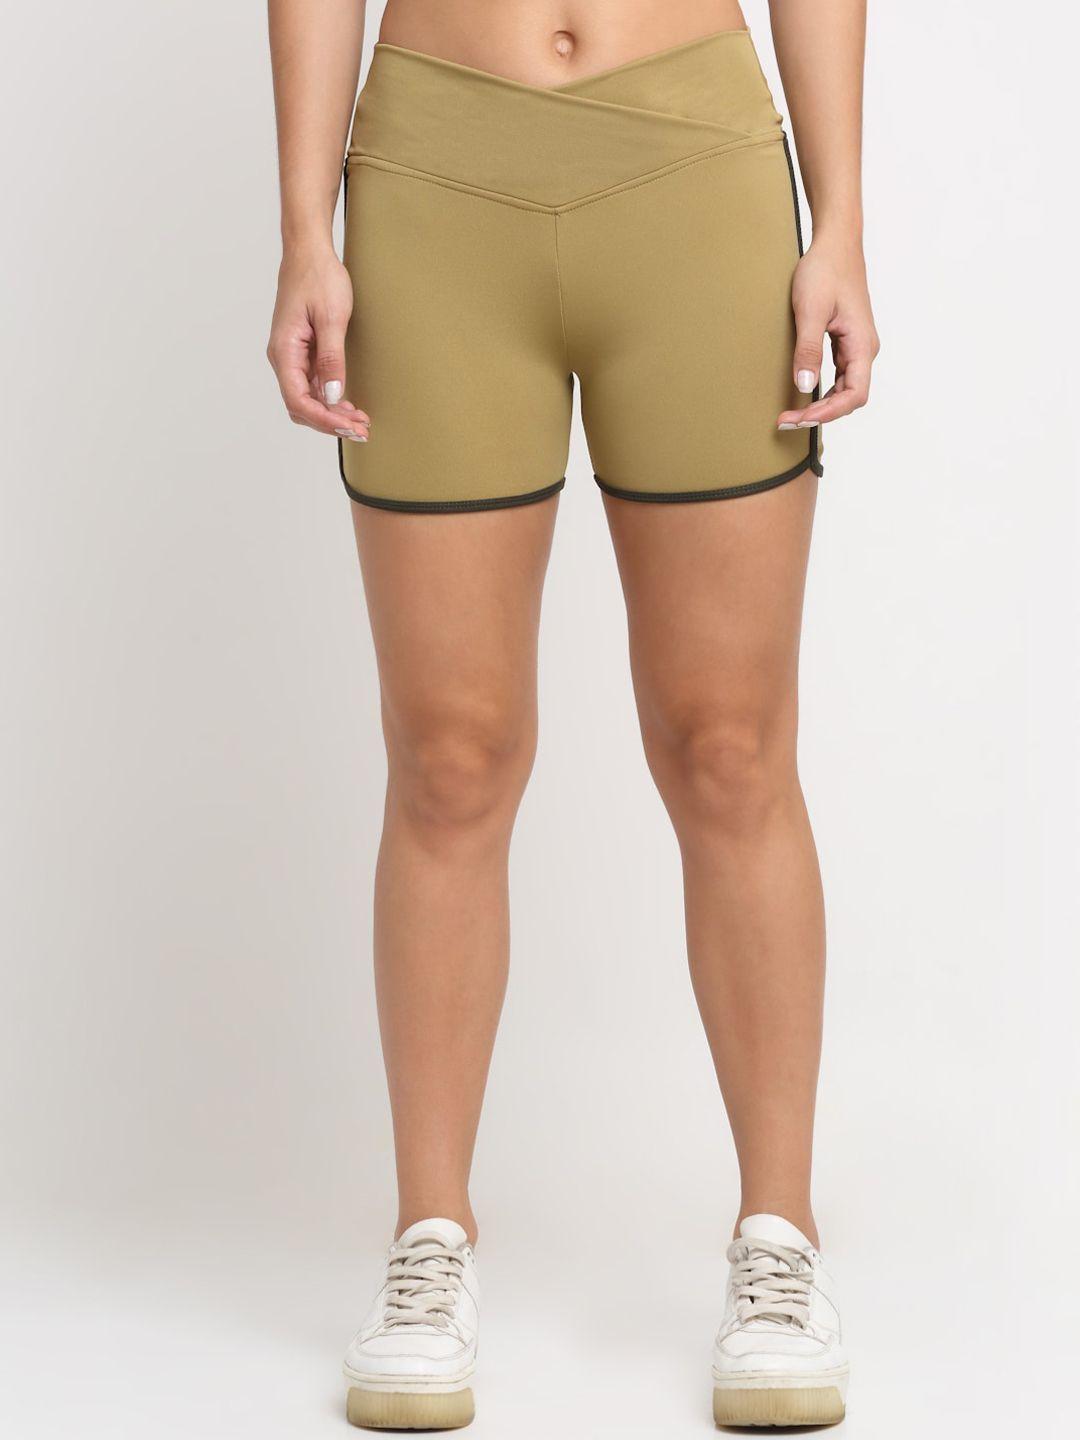 everdion women khaki slim fit running sports shorts